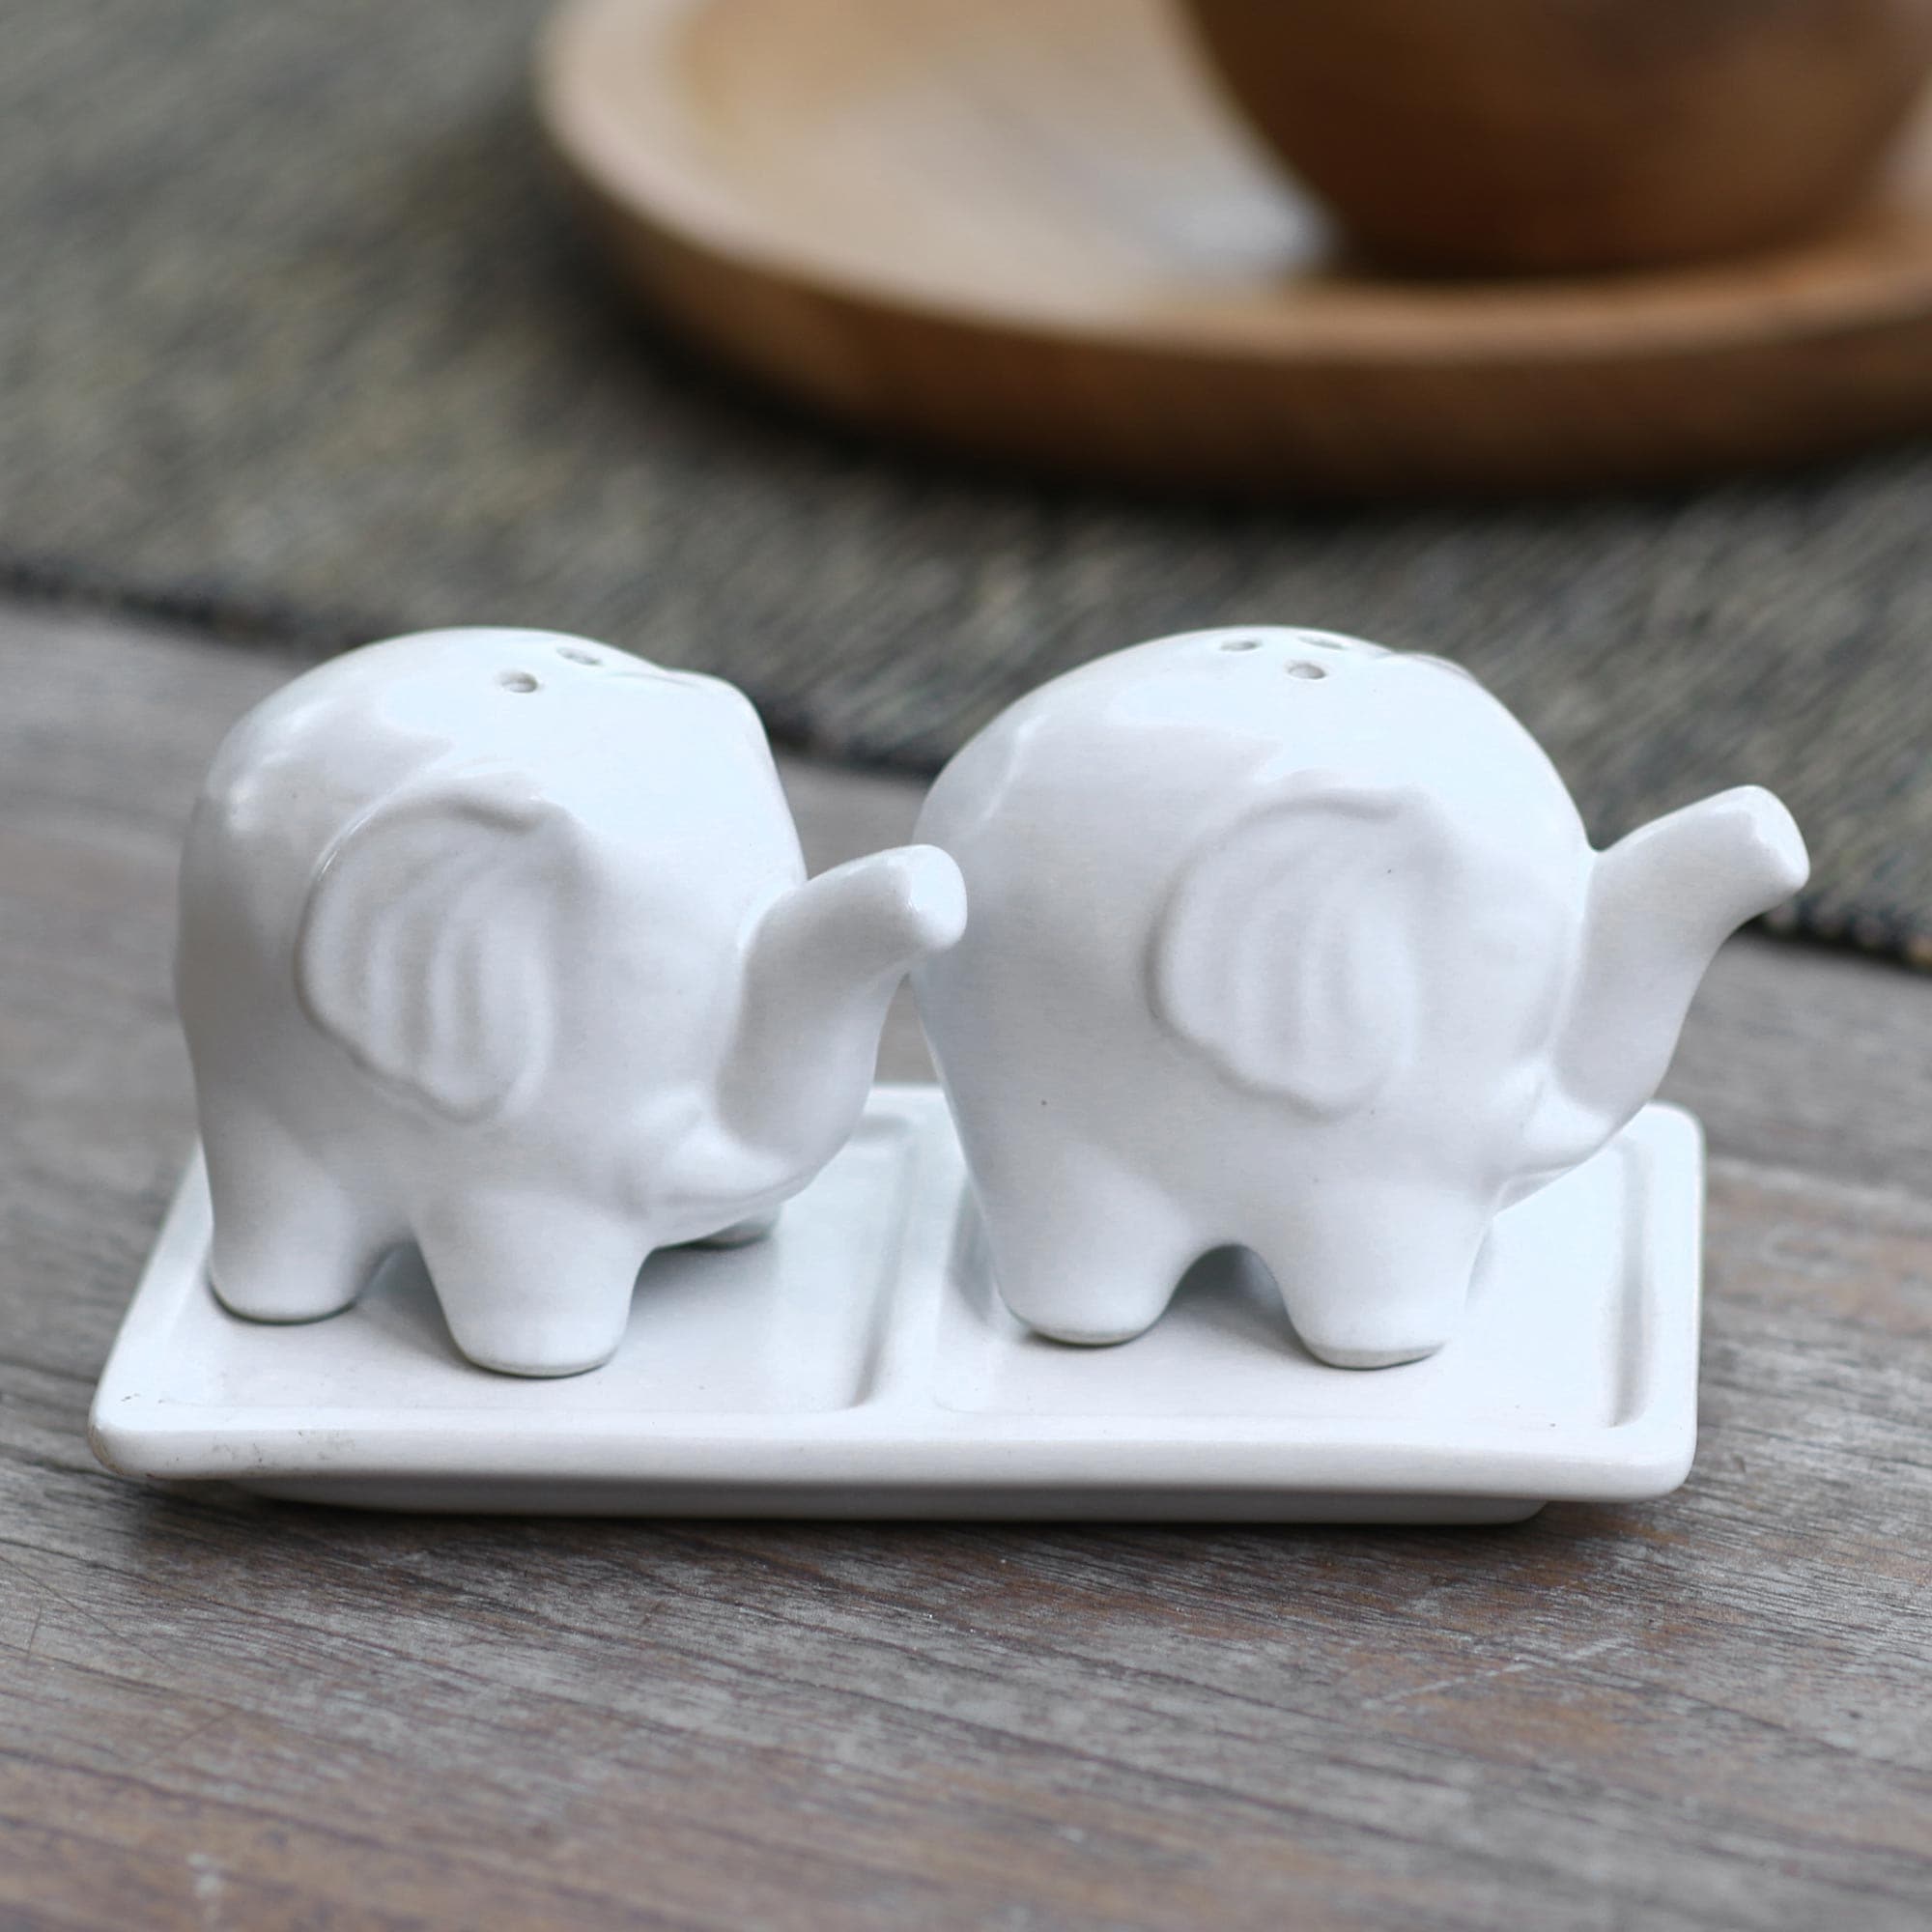 https://ak1.ostkcdn.com/images/products/is/images/direct/da96b9a9bd66c00229a686135c09ee6a9afe4e21/Novica-Handmade-Eager-Elephants-In-White-Ceramic-Salt-And-Pepper-Set.jpg